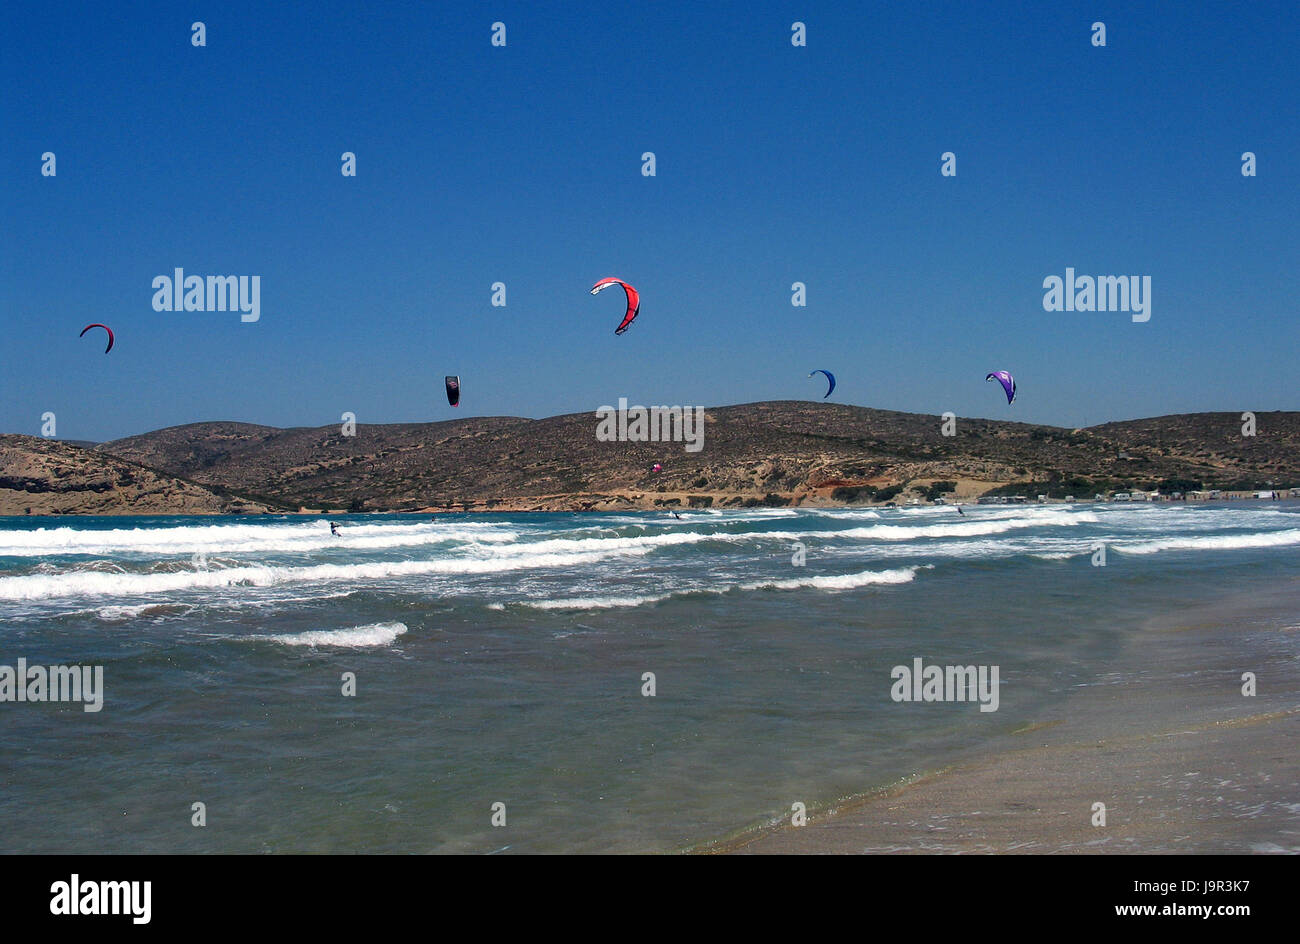 greece, water, mediterranean, salt water, sea, ocean, bay, aquatic sport, wind, Stock Photo